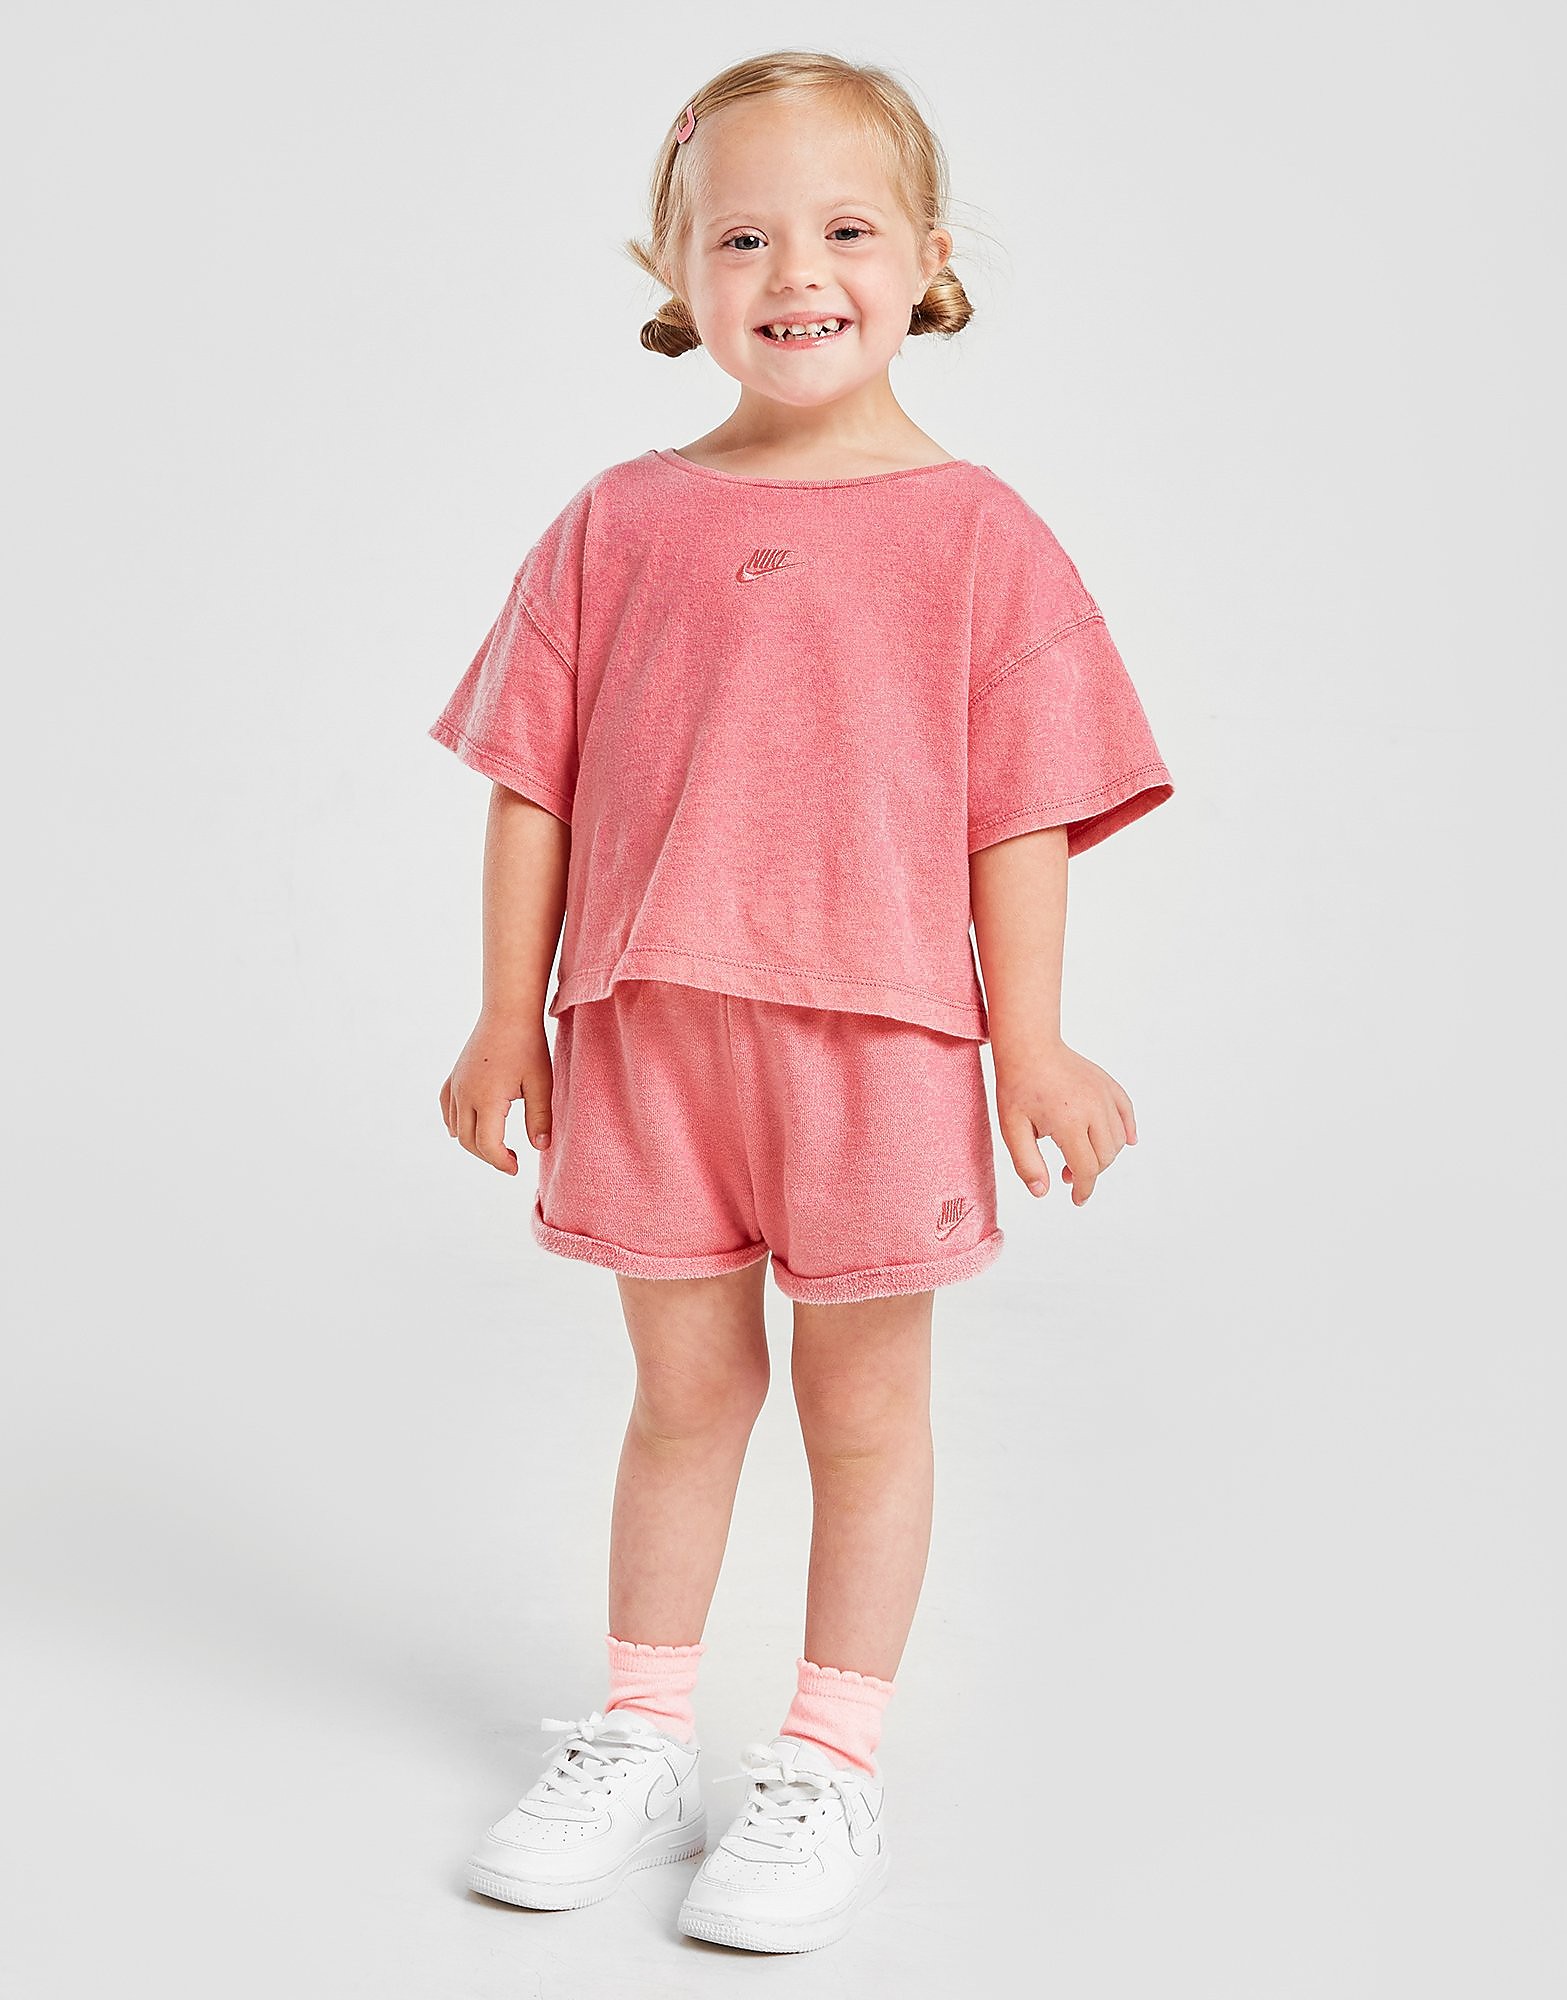 Nike Girls' Washed T-Shirt/Shorts Set Infant - Only at JD, Rosa